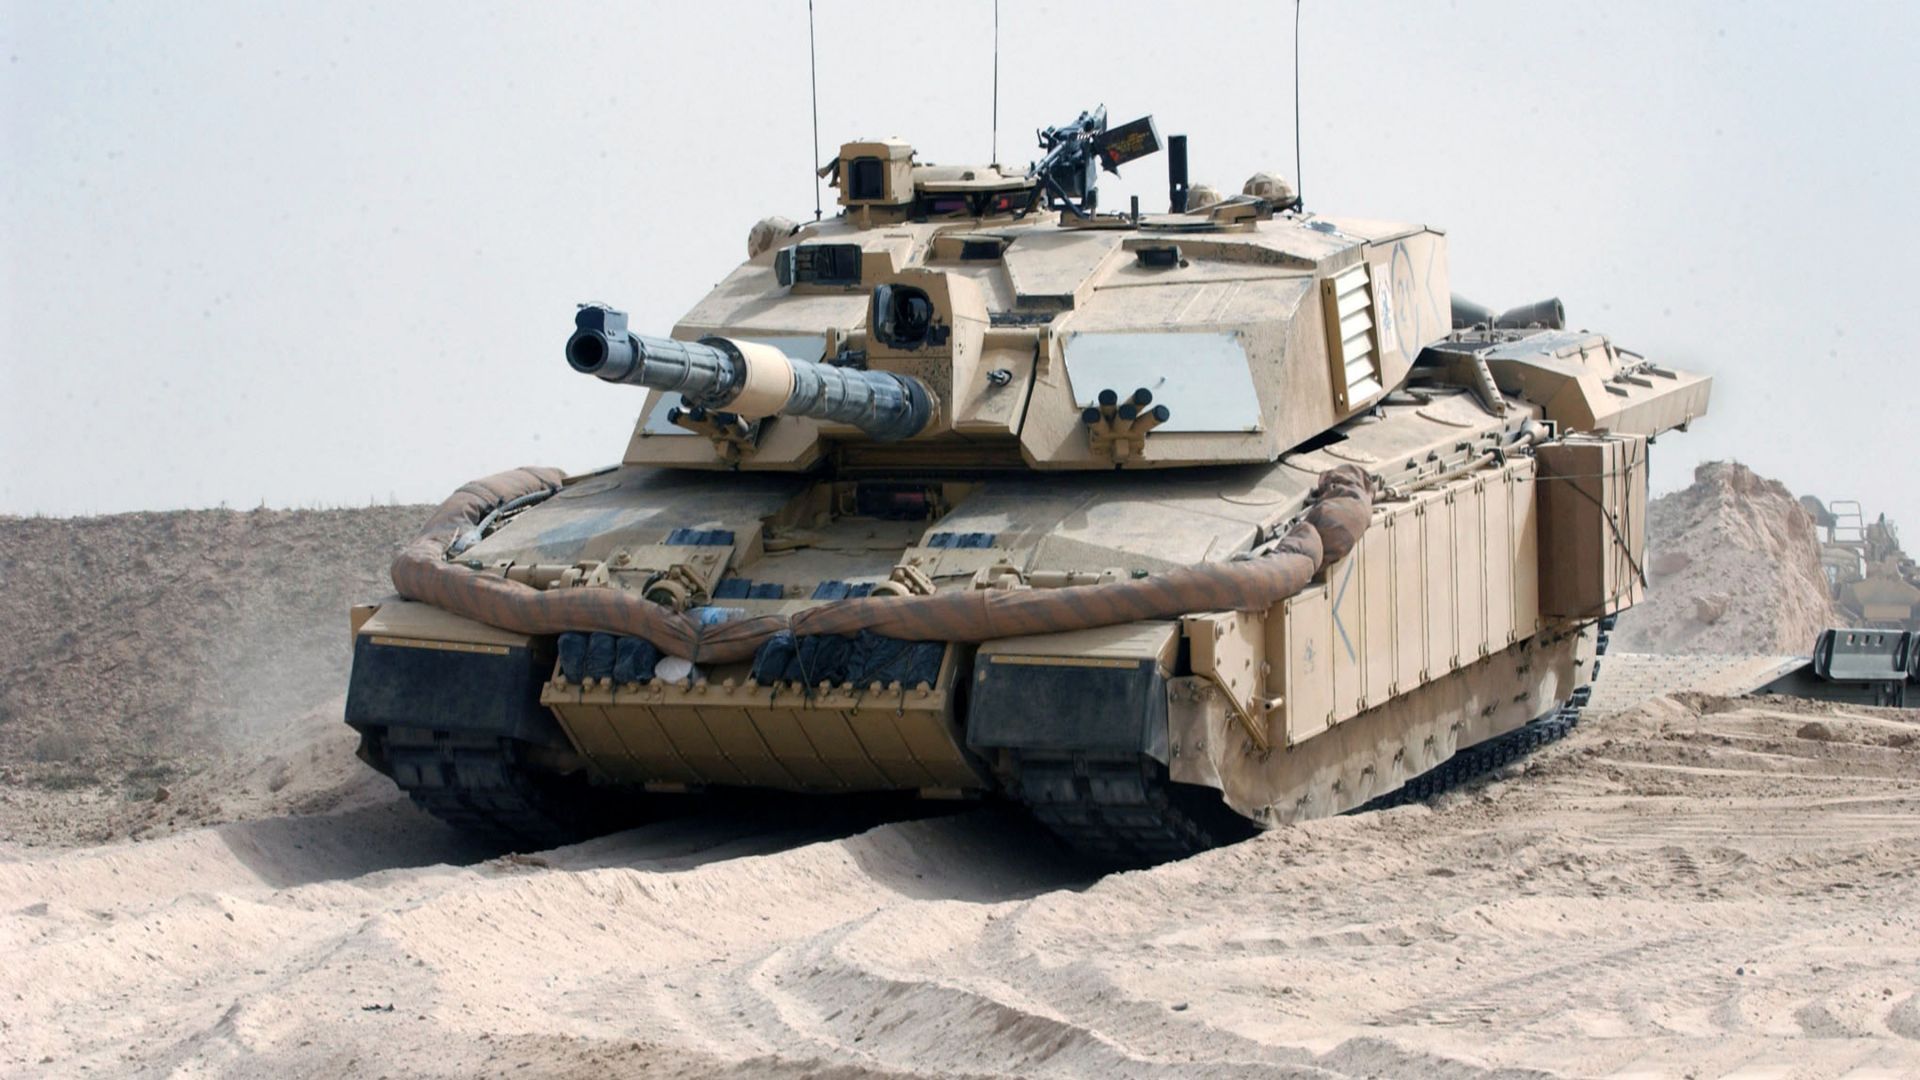 Challenger 2 Wallpaper, Military: Challenger FV MBT, tank, British Army, United Kingdom, armoured, desert. Battle tank, Military, Military vehicles